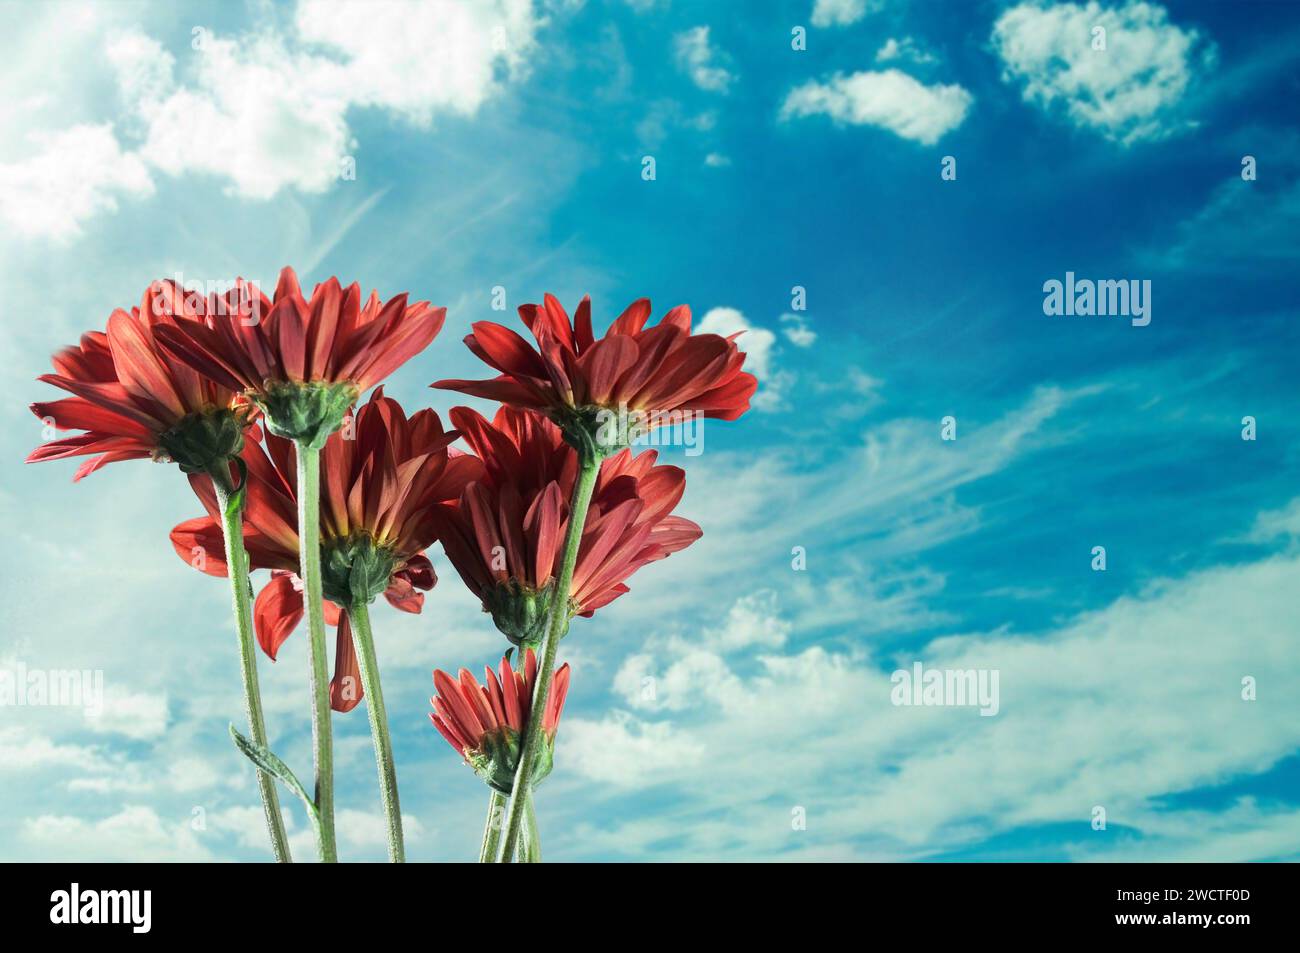 Chrysanthemum koreanum flower with red petals during at daytime Stock Photo